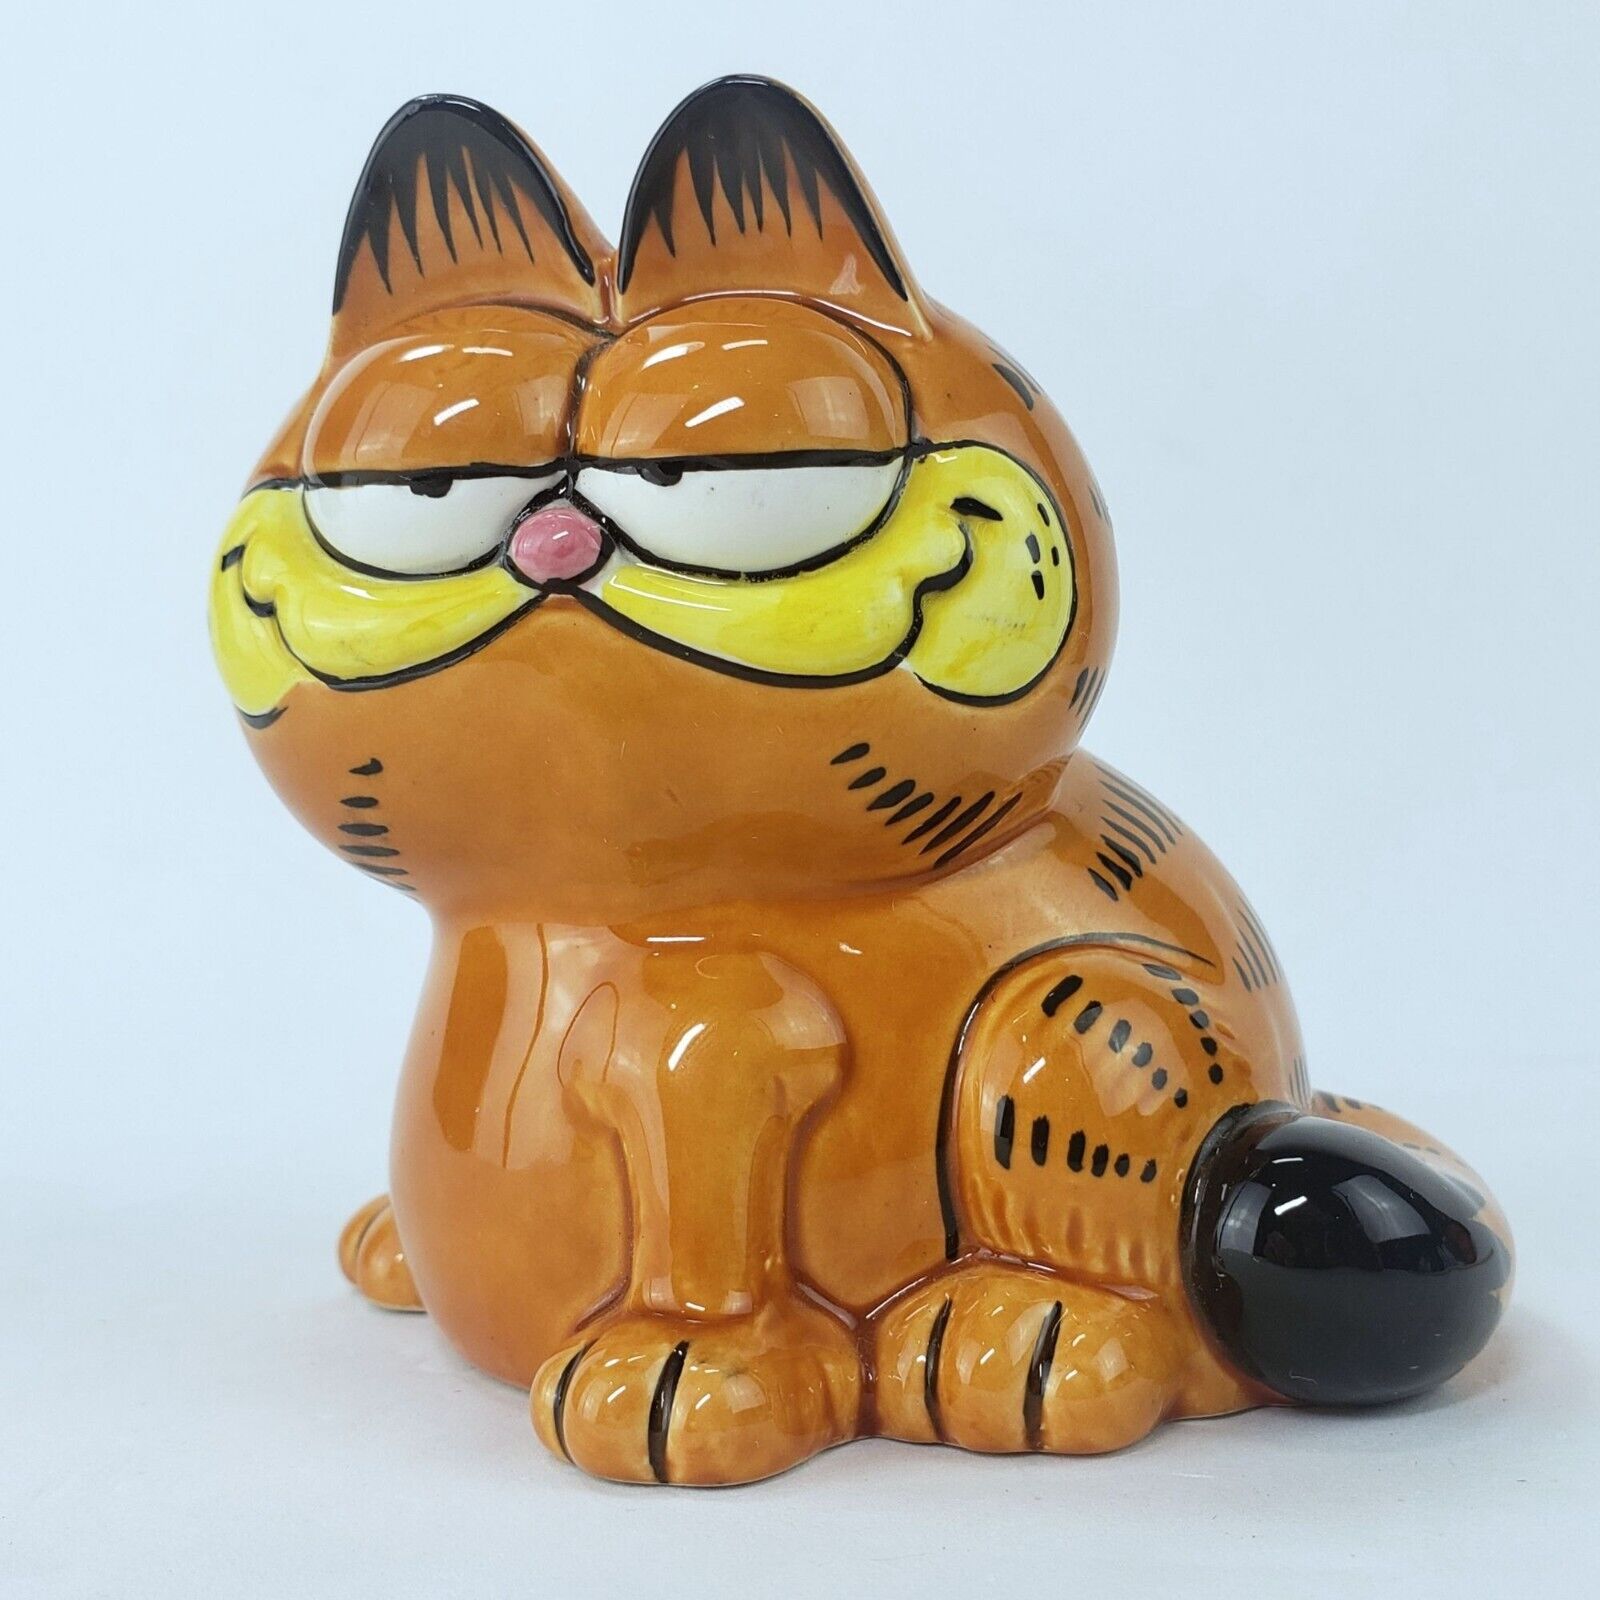 Vintage 1981 Garfield the Cat Enesco Ceramic Figurine made in Japan